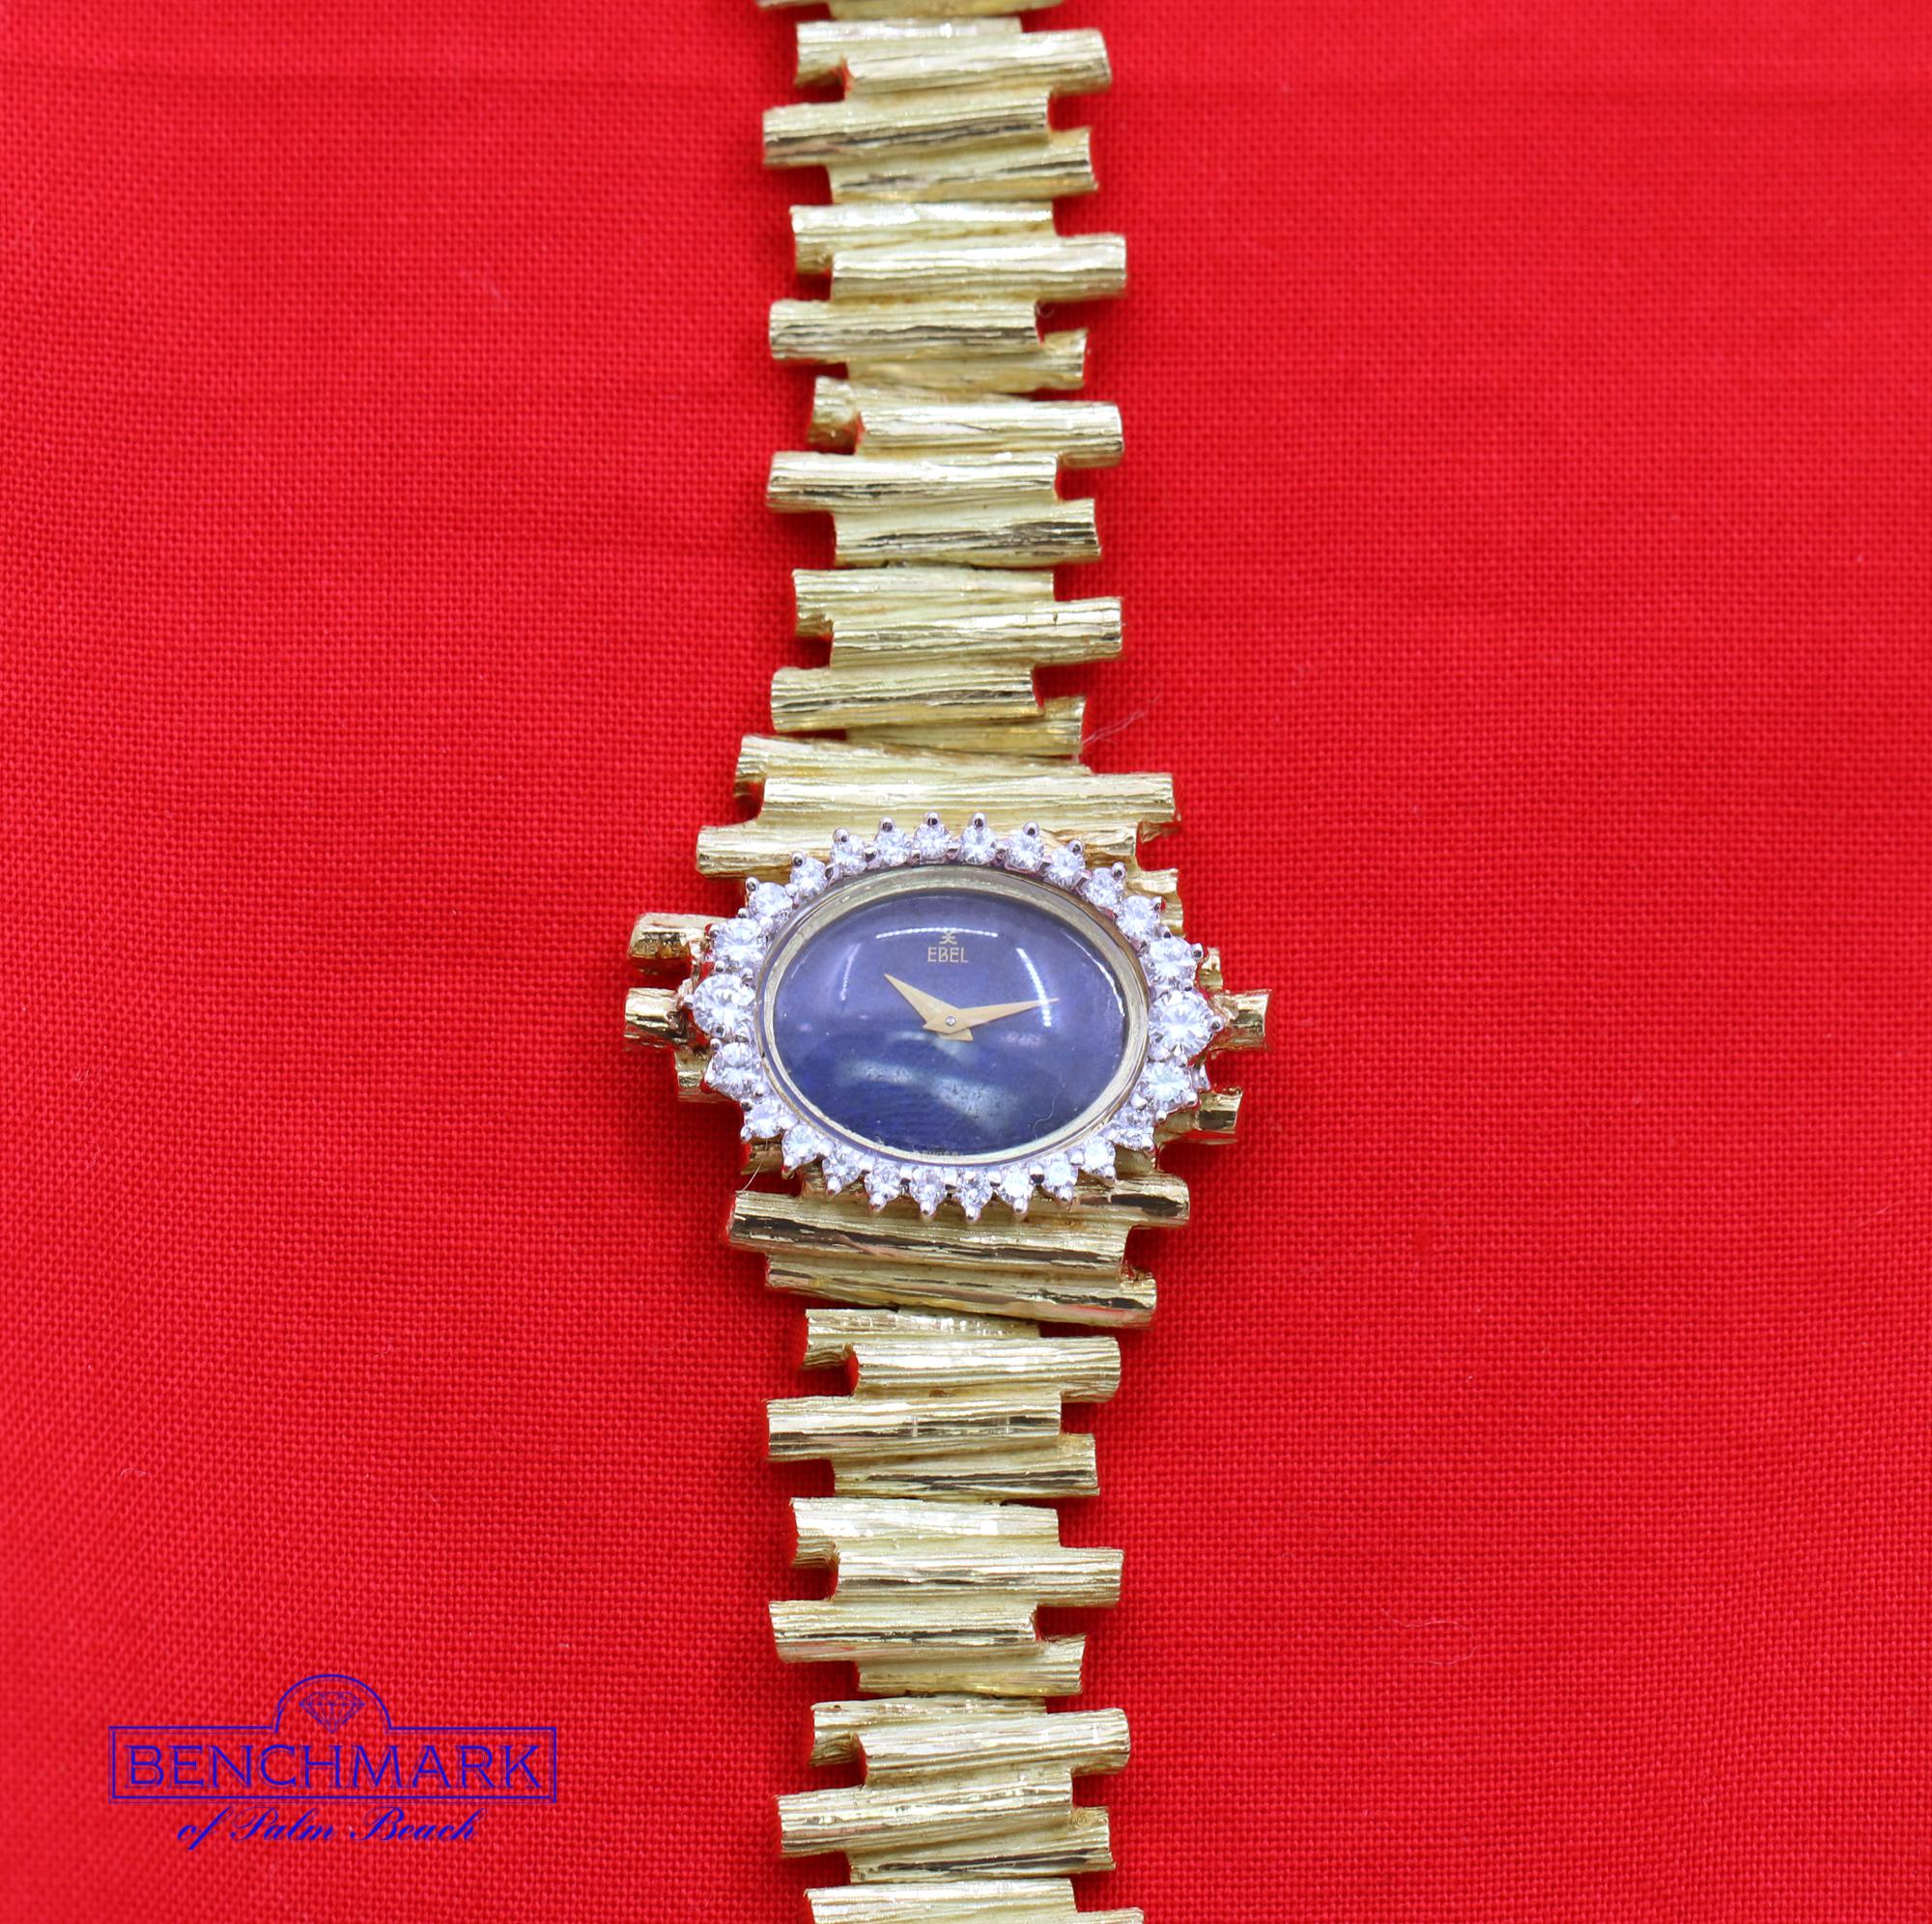 Modern 1960s Ebel Watch with Lapis Lazuli Dial and Diamond Bezel